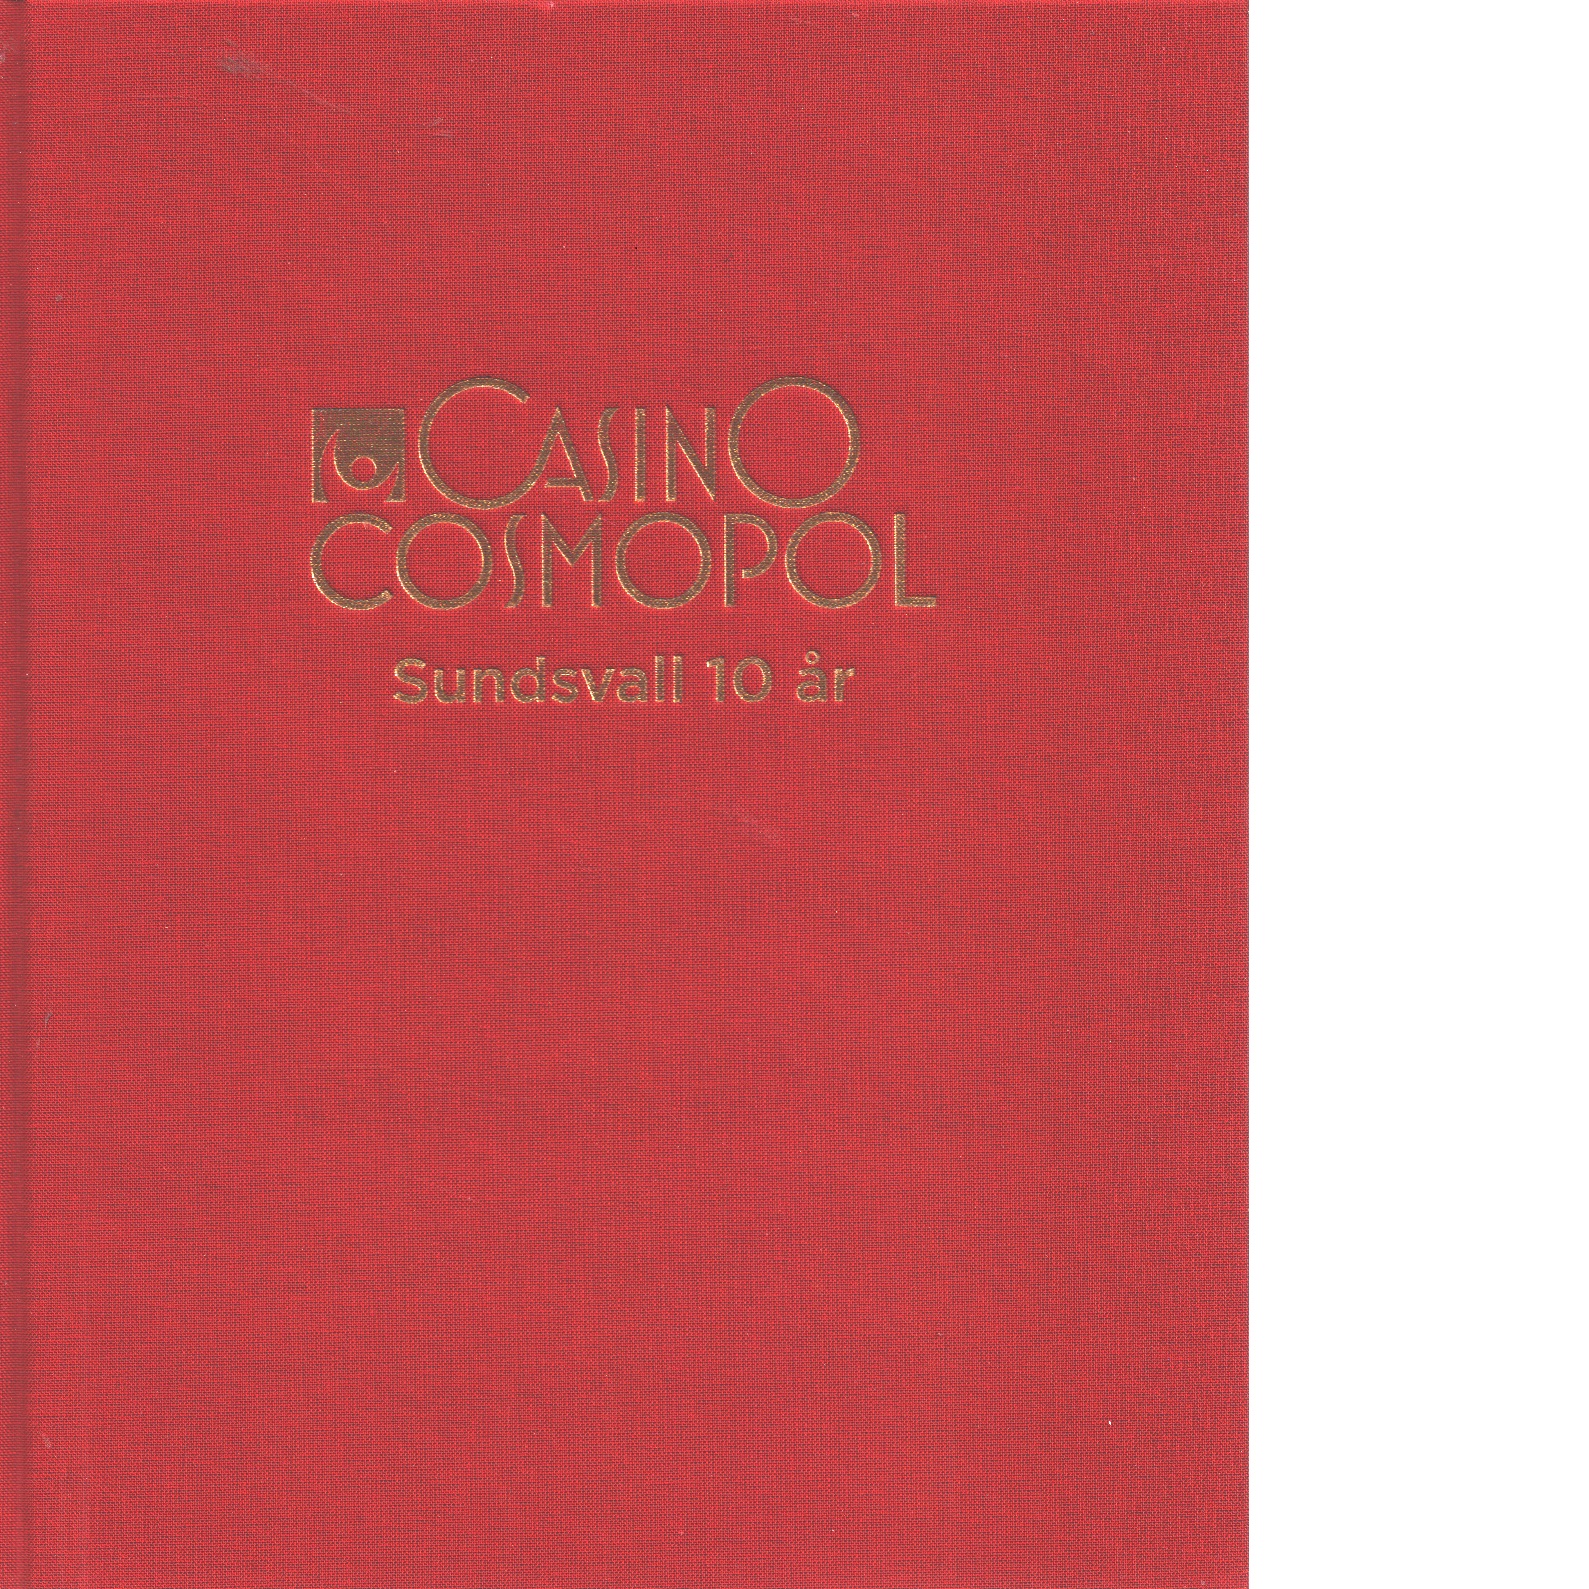 Casino Cosmopol : Casino Cosmopol Sundsvall 10 år - Red.